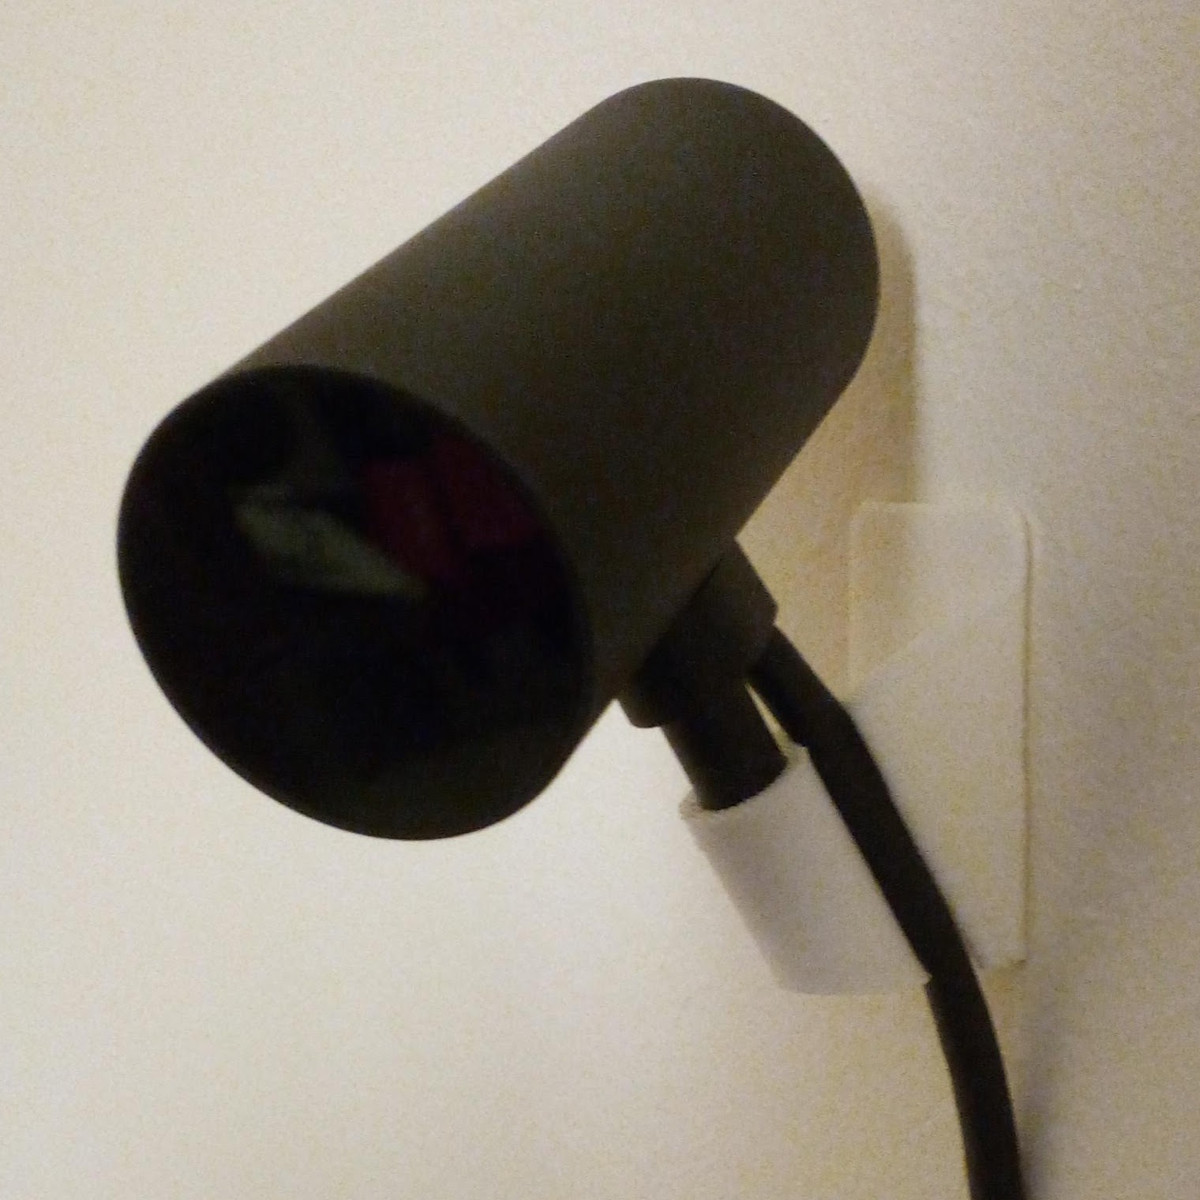 Oculus sensor wall holder